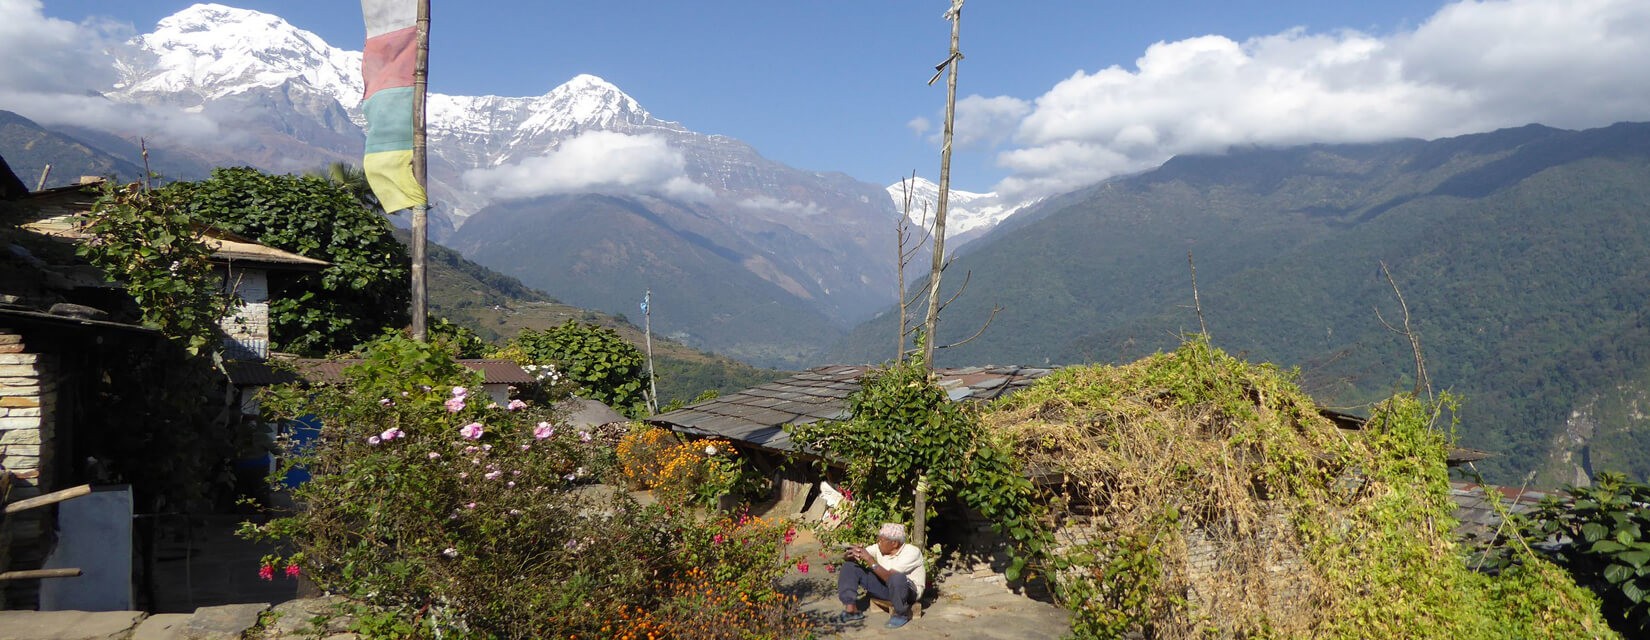 Himalaya view from Ghandruk